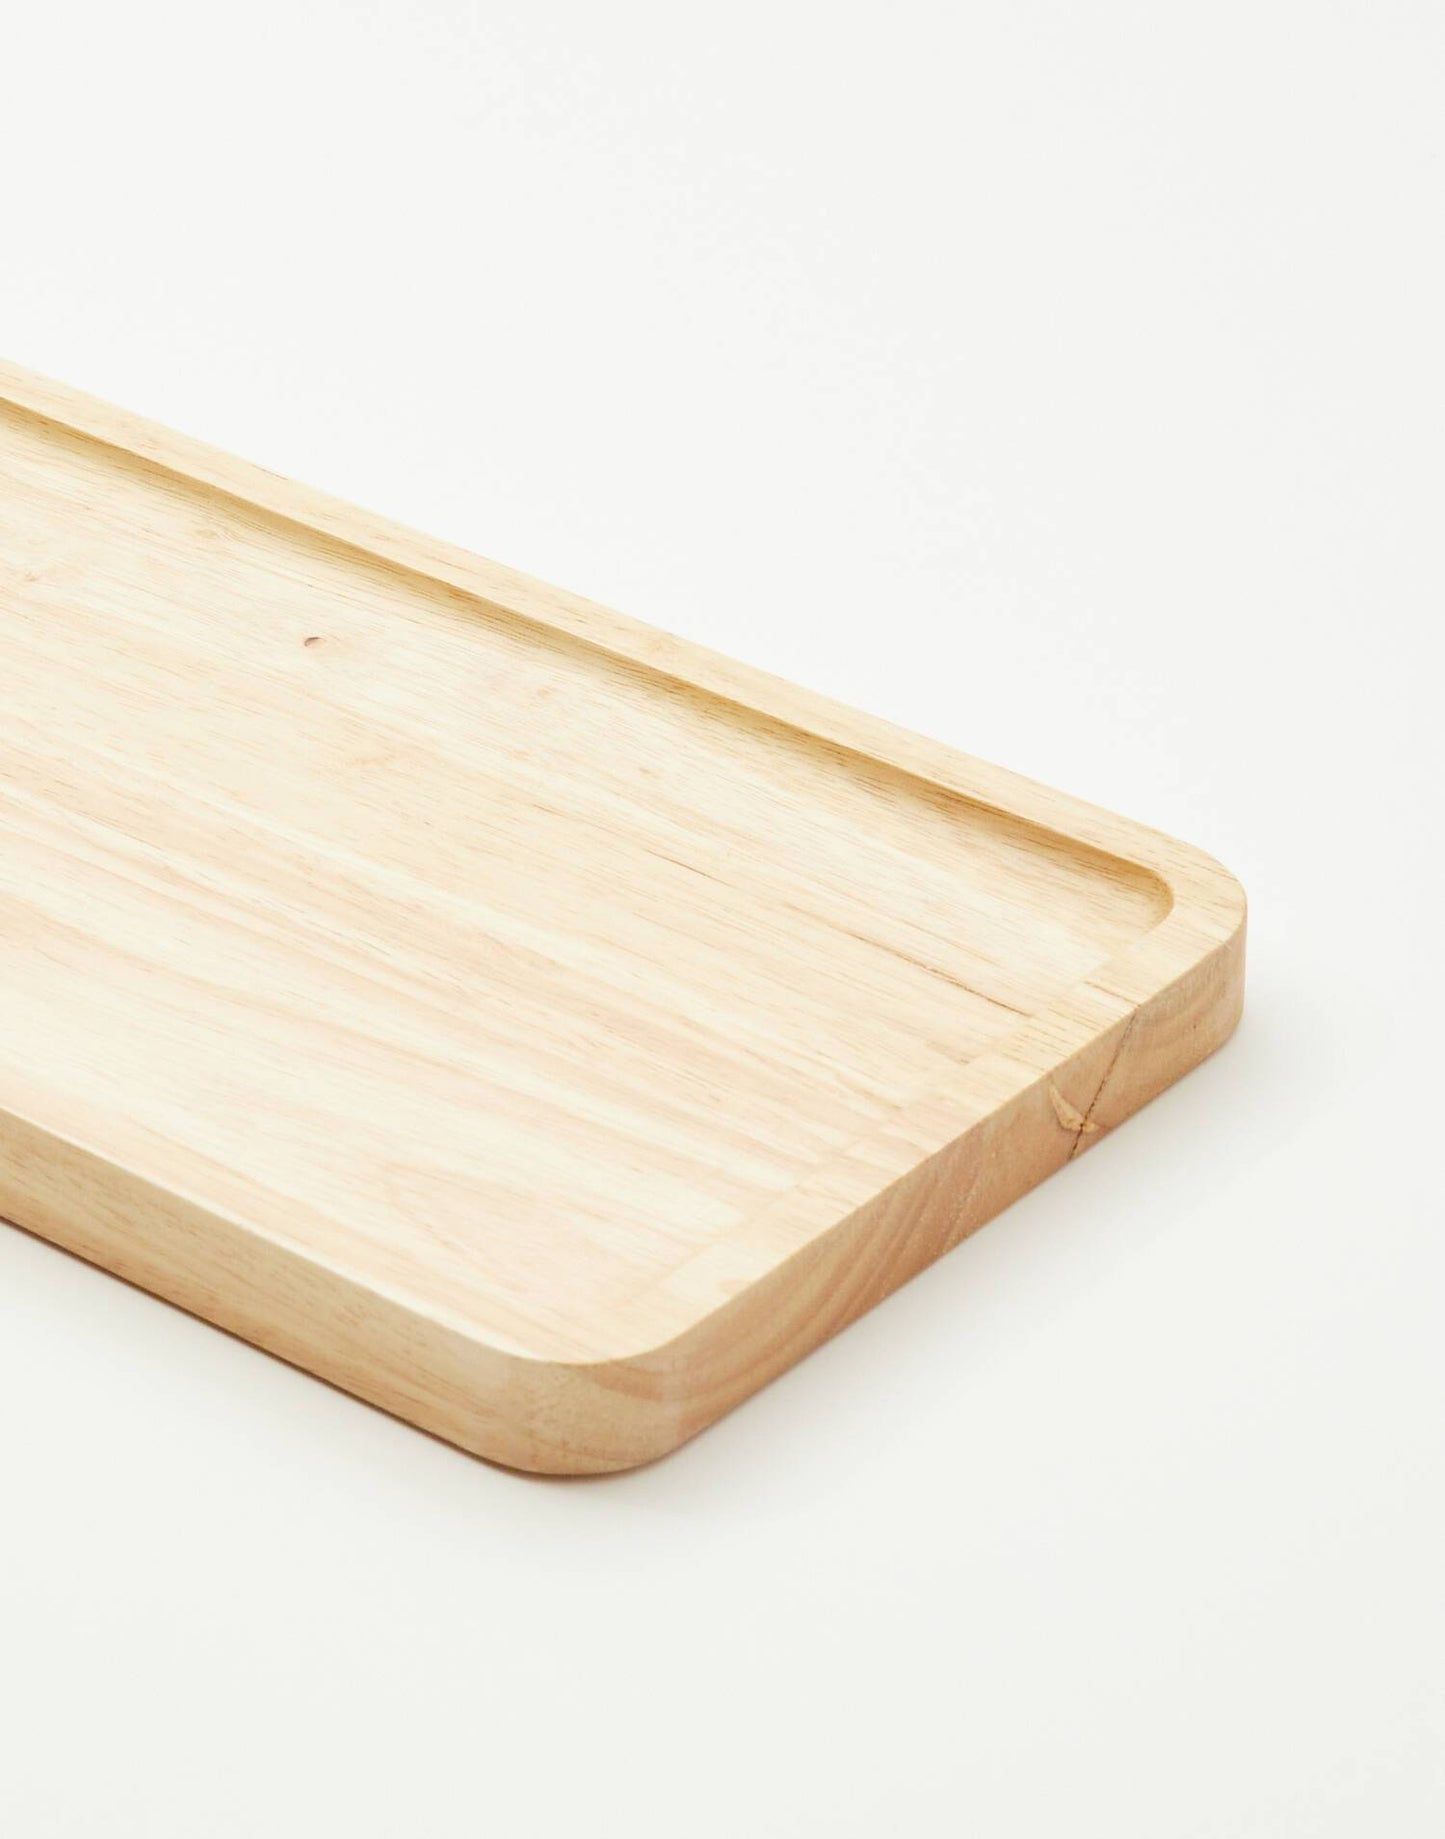 Rectangular wood tray